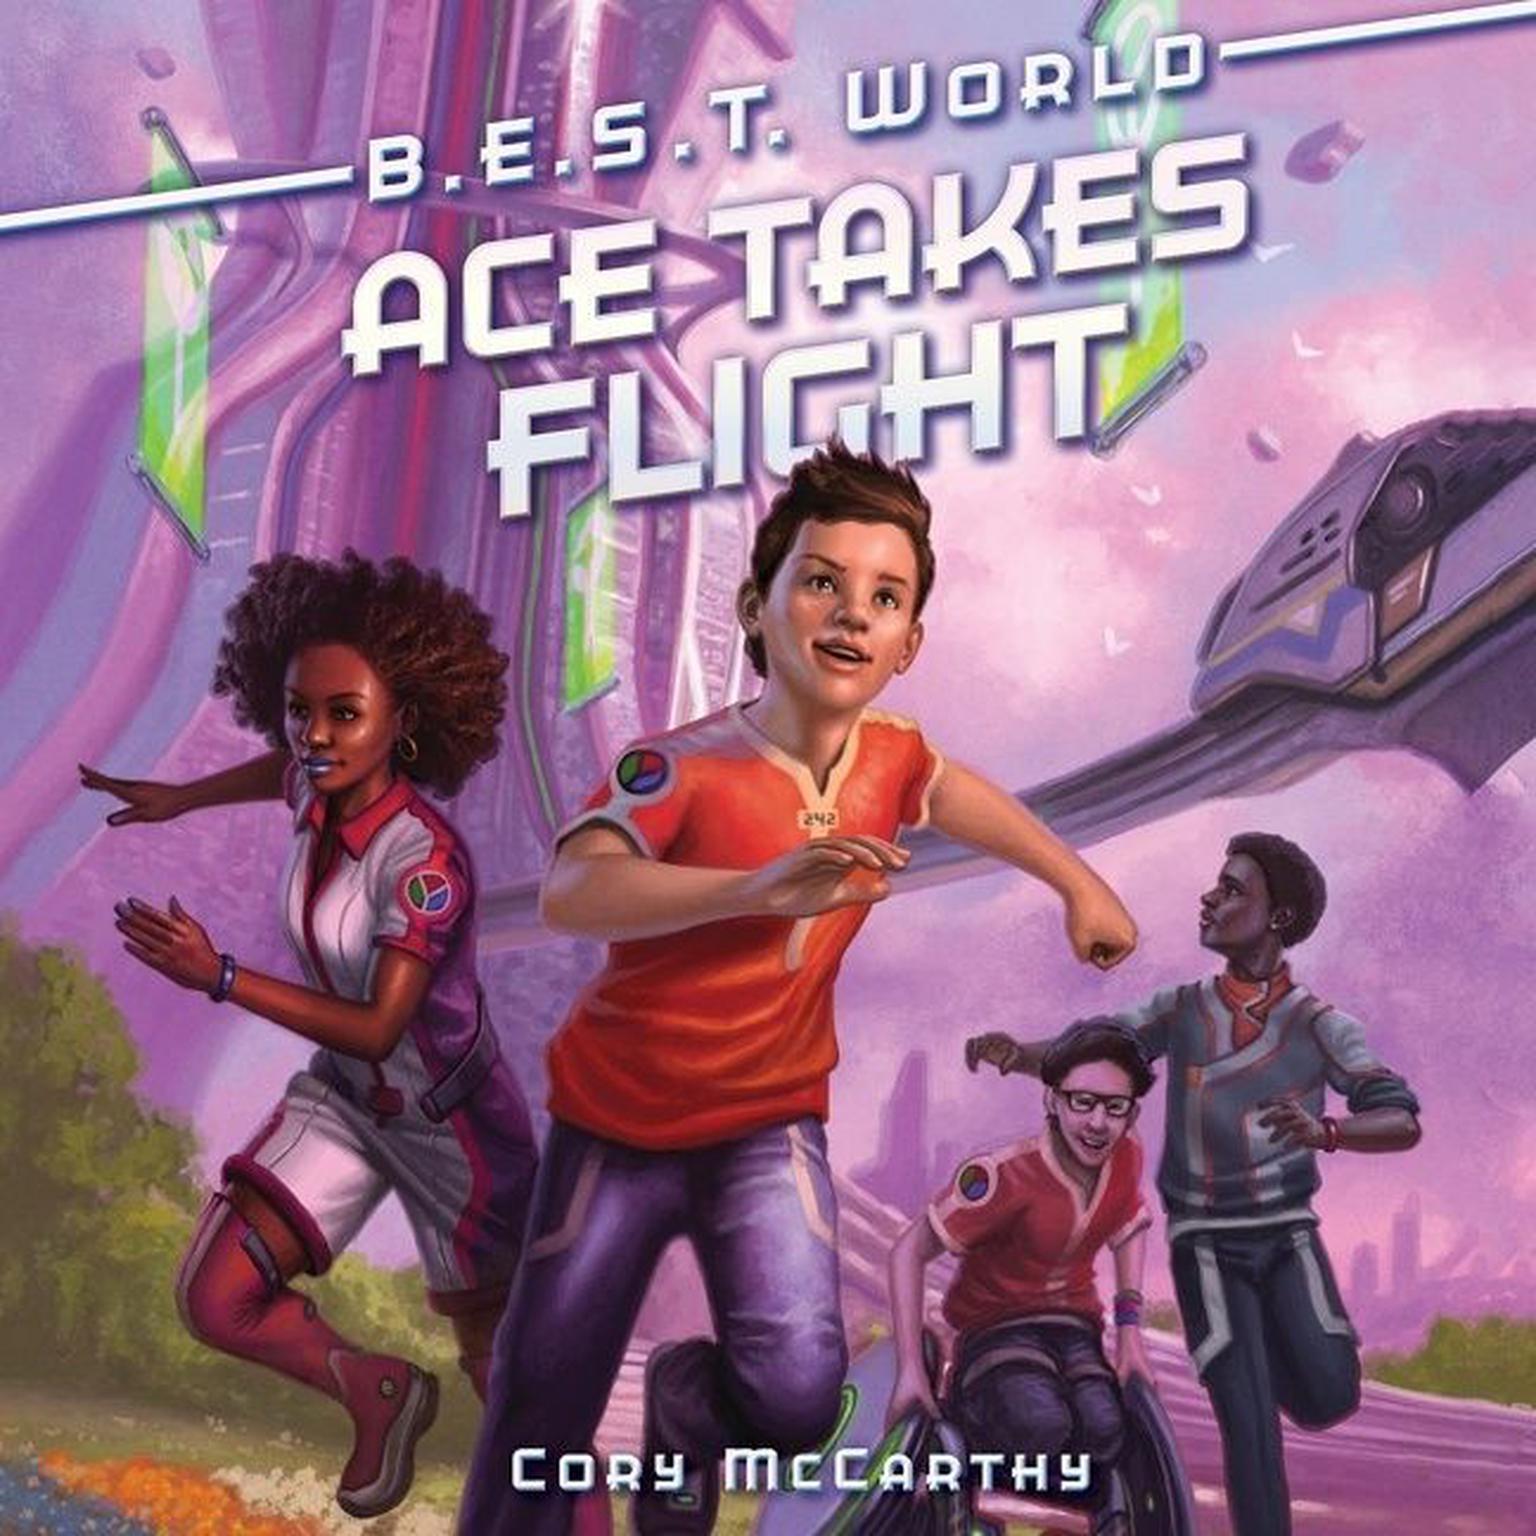 Ace Takes Flight Audiobook, by Cori McCarthy